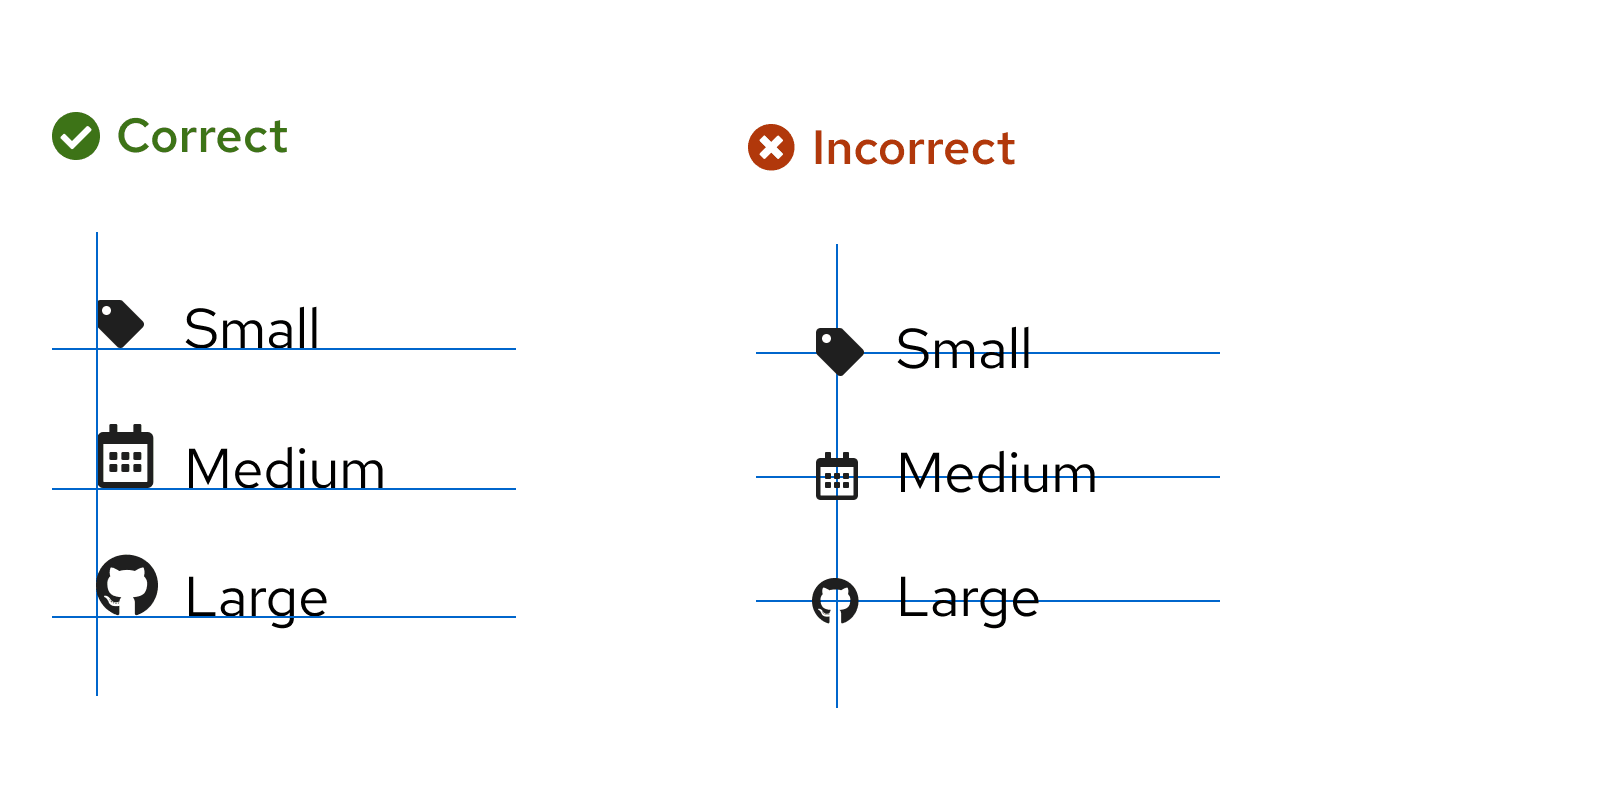 Icon alignment